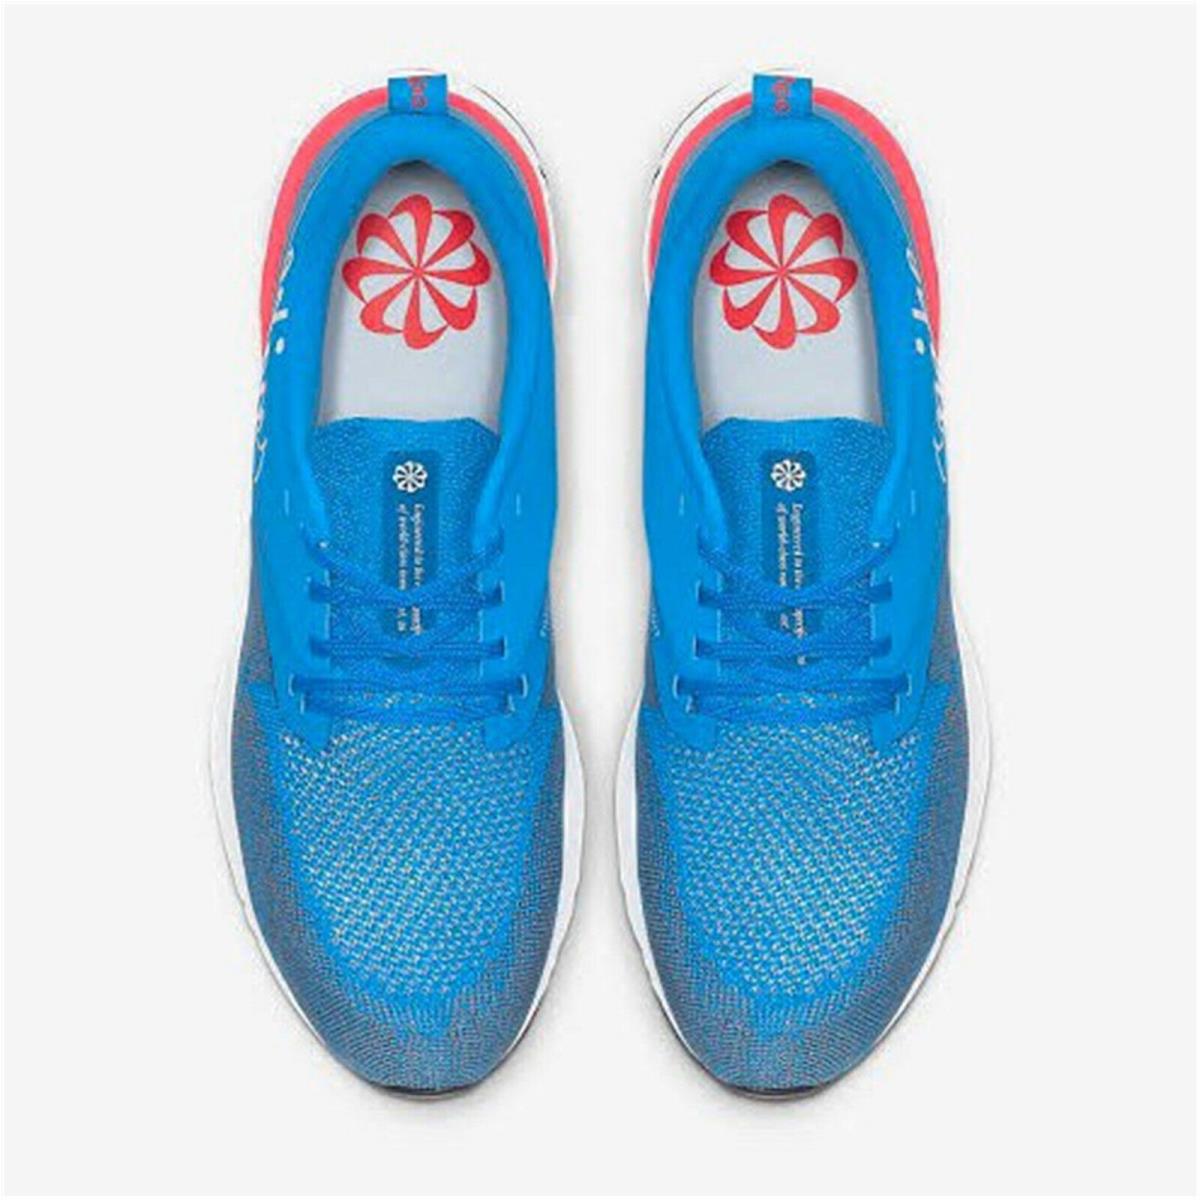 Nike shoes  - BLUE HERO / WHITE-STELLAR INDIGO , BLUE HERO / WHITE-STELLAR INDIGO Manufacturer 1